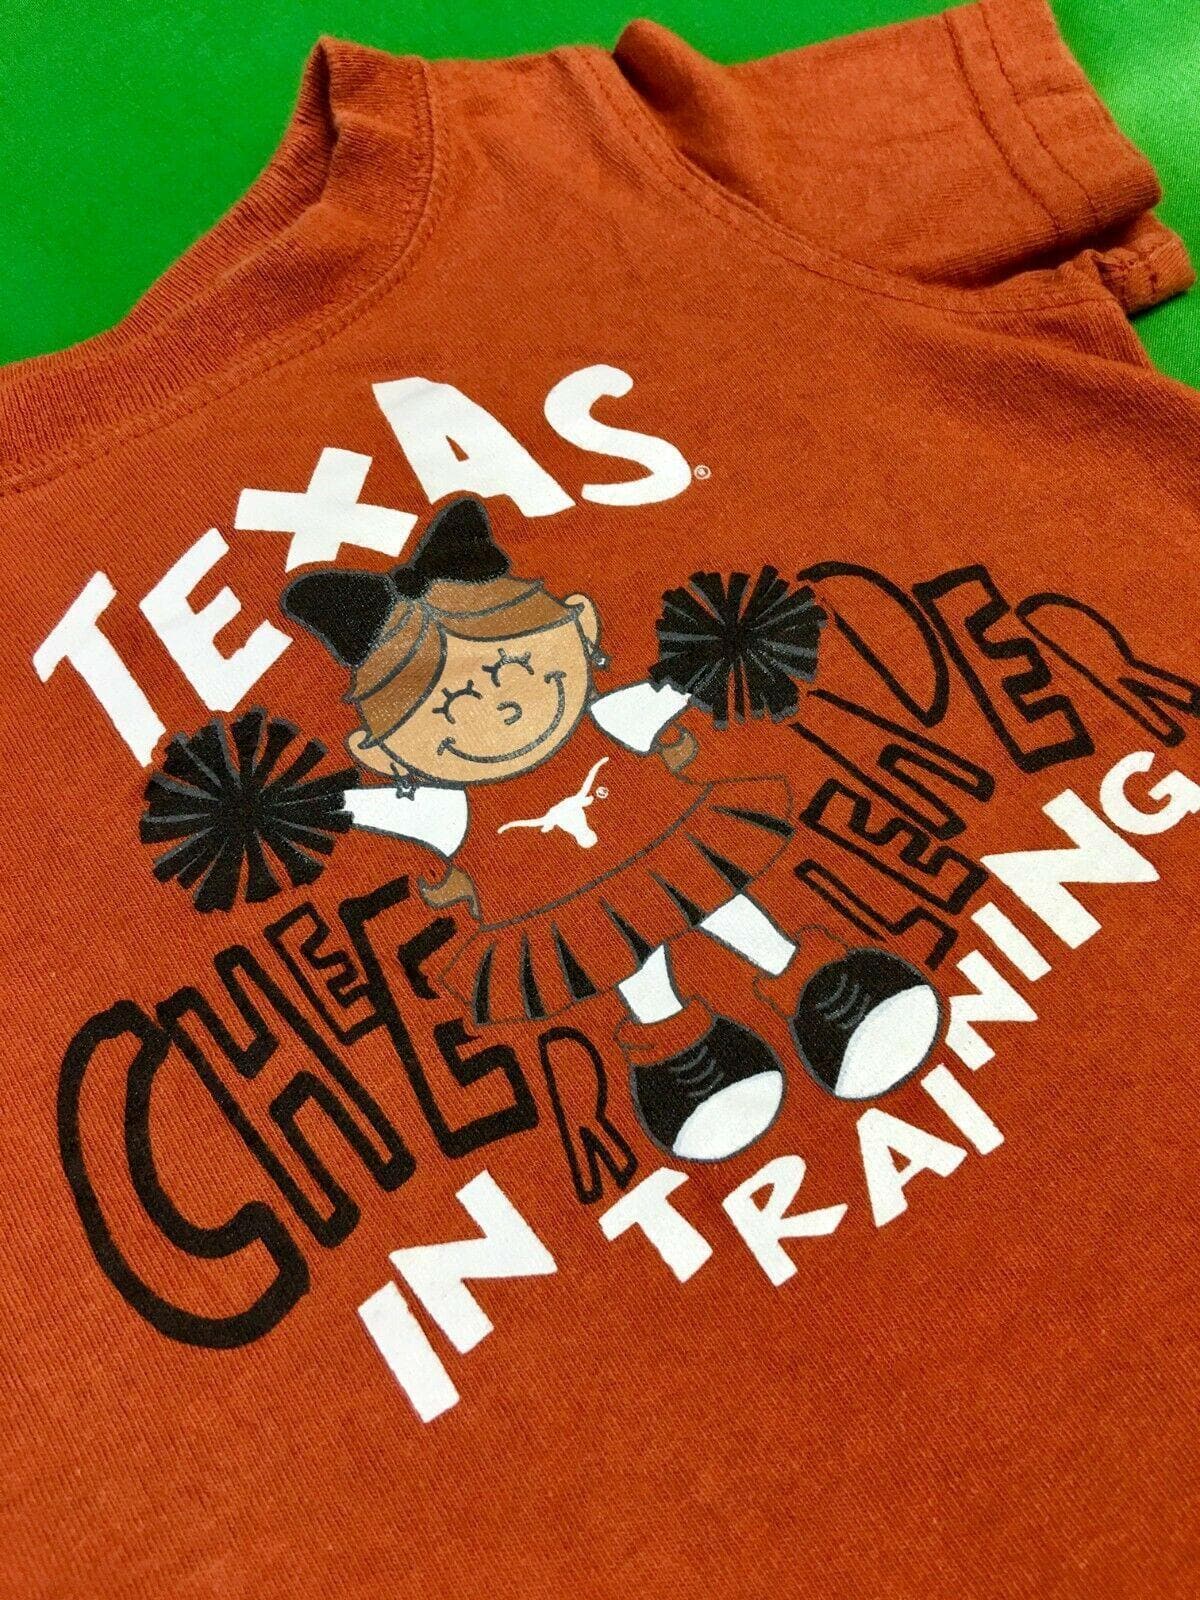 NCAA Texas Longhorns "Cheerleader in Training" Girls' T-Shirt 18 Months